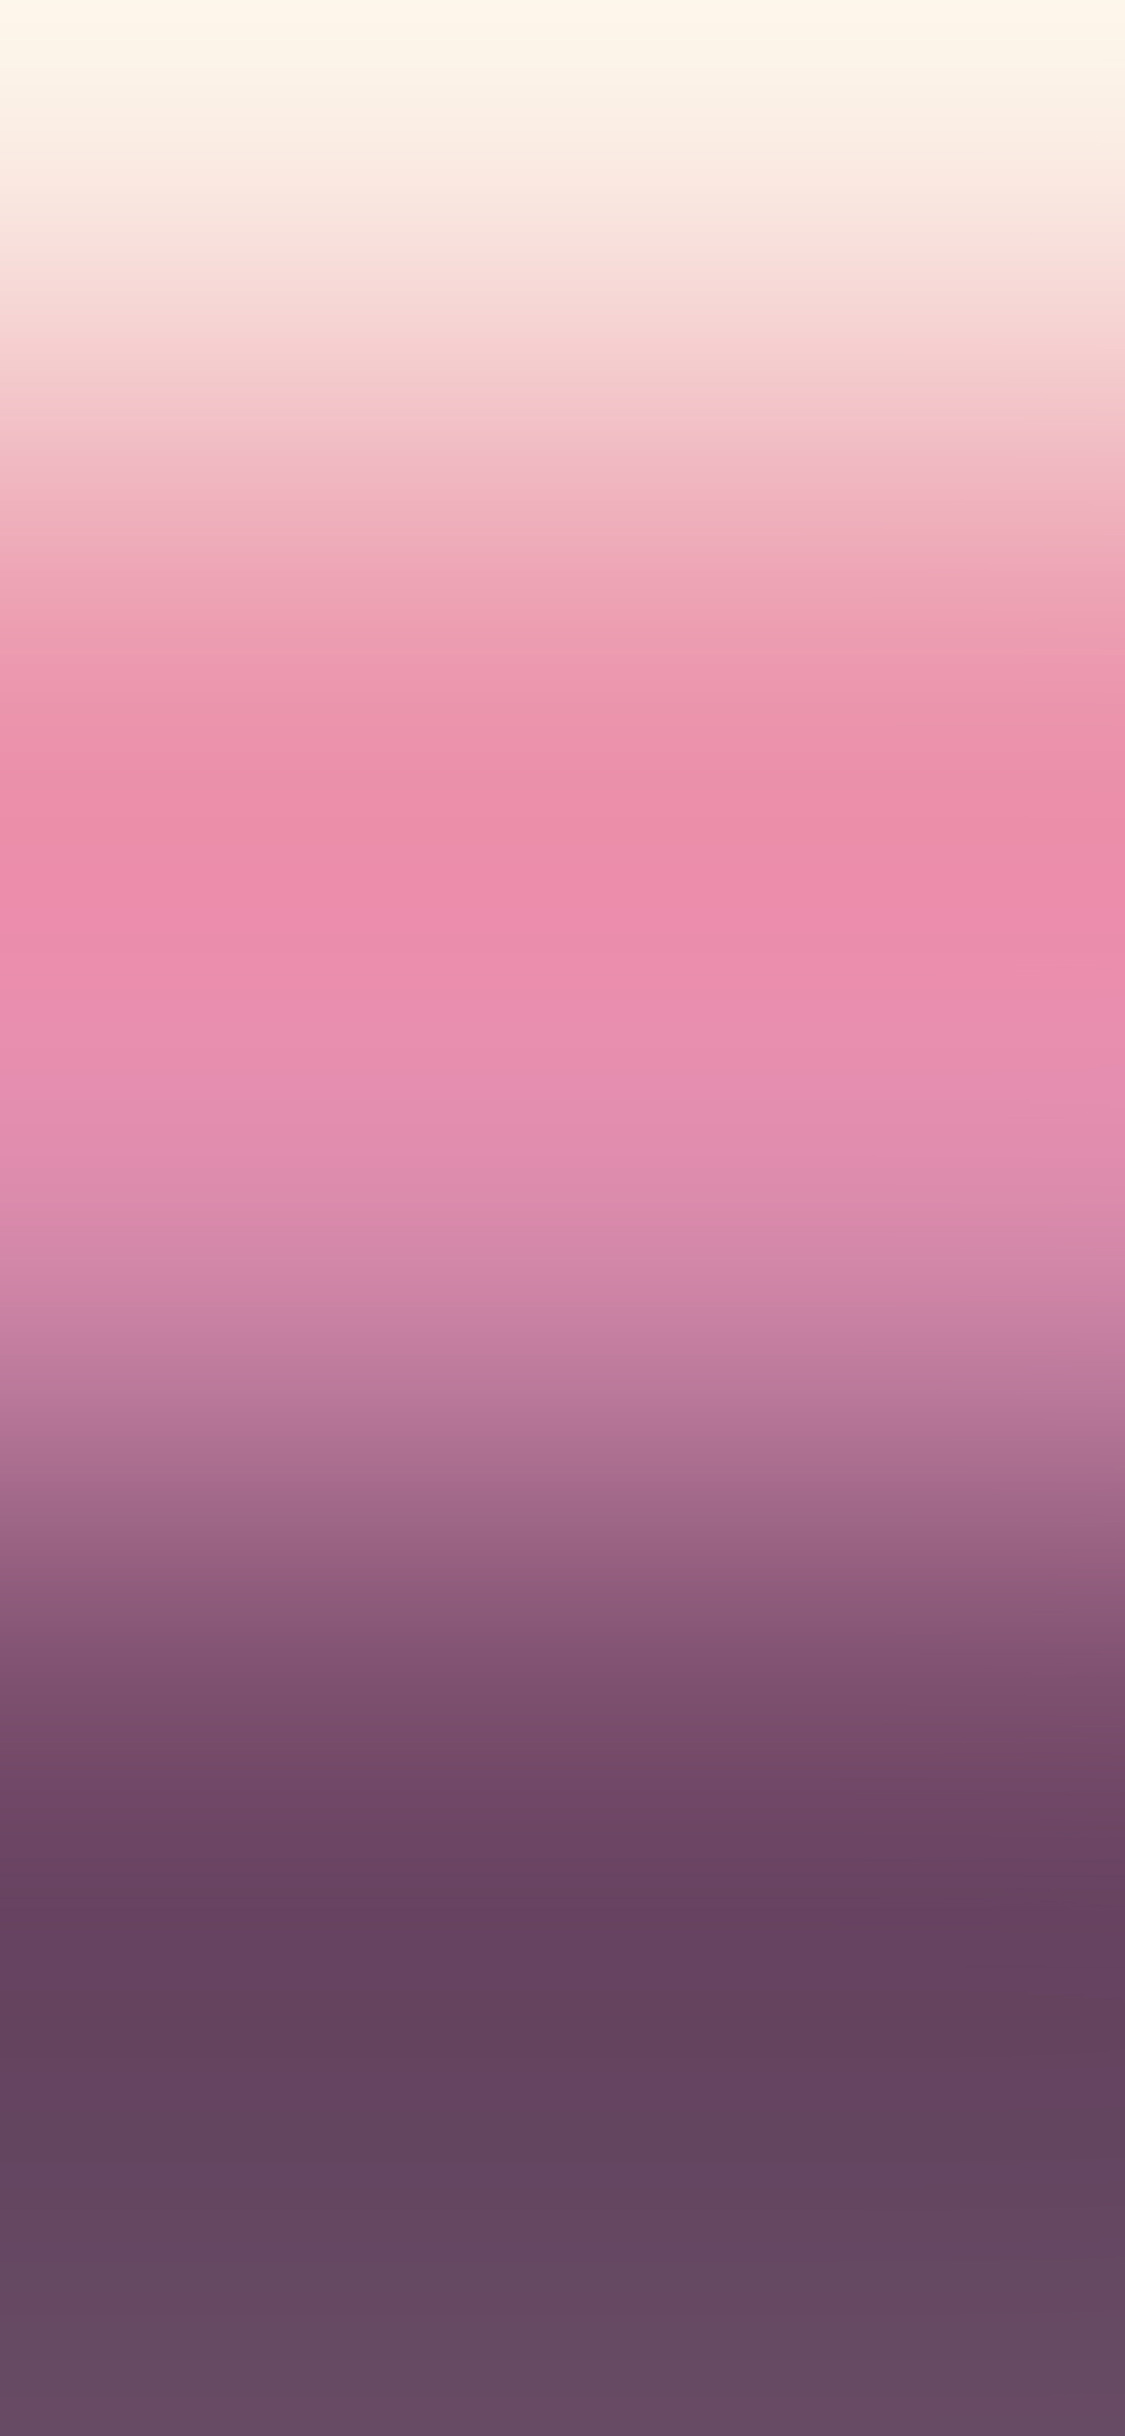 Iphone 8 Plus Pink 1125x2436 Wallpaper Teahub Io